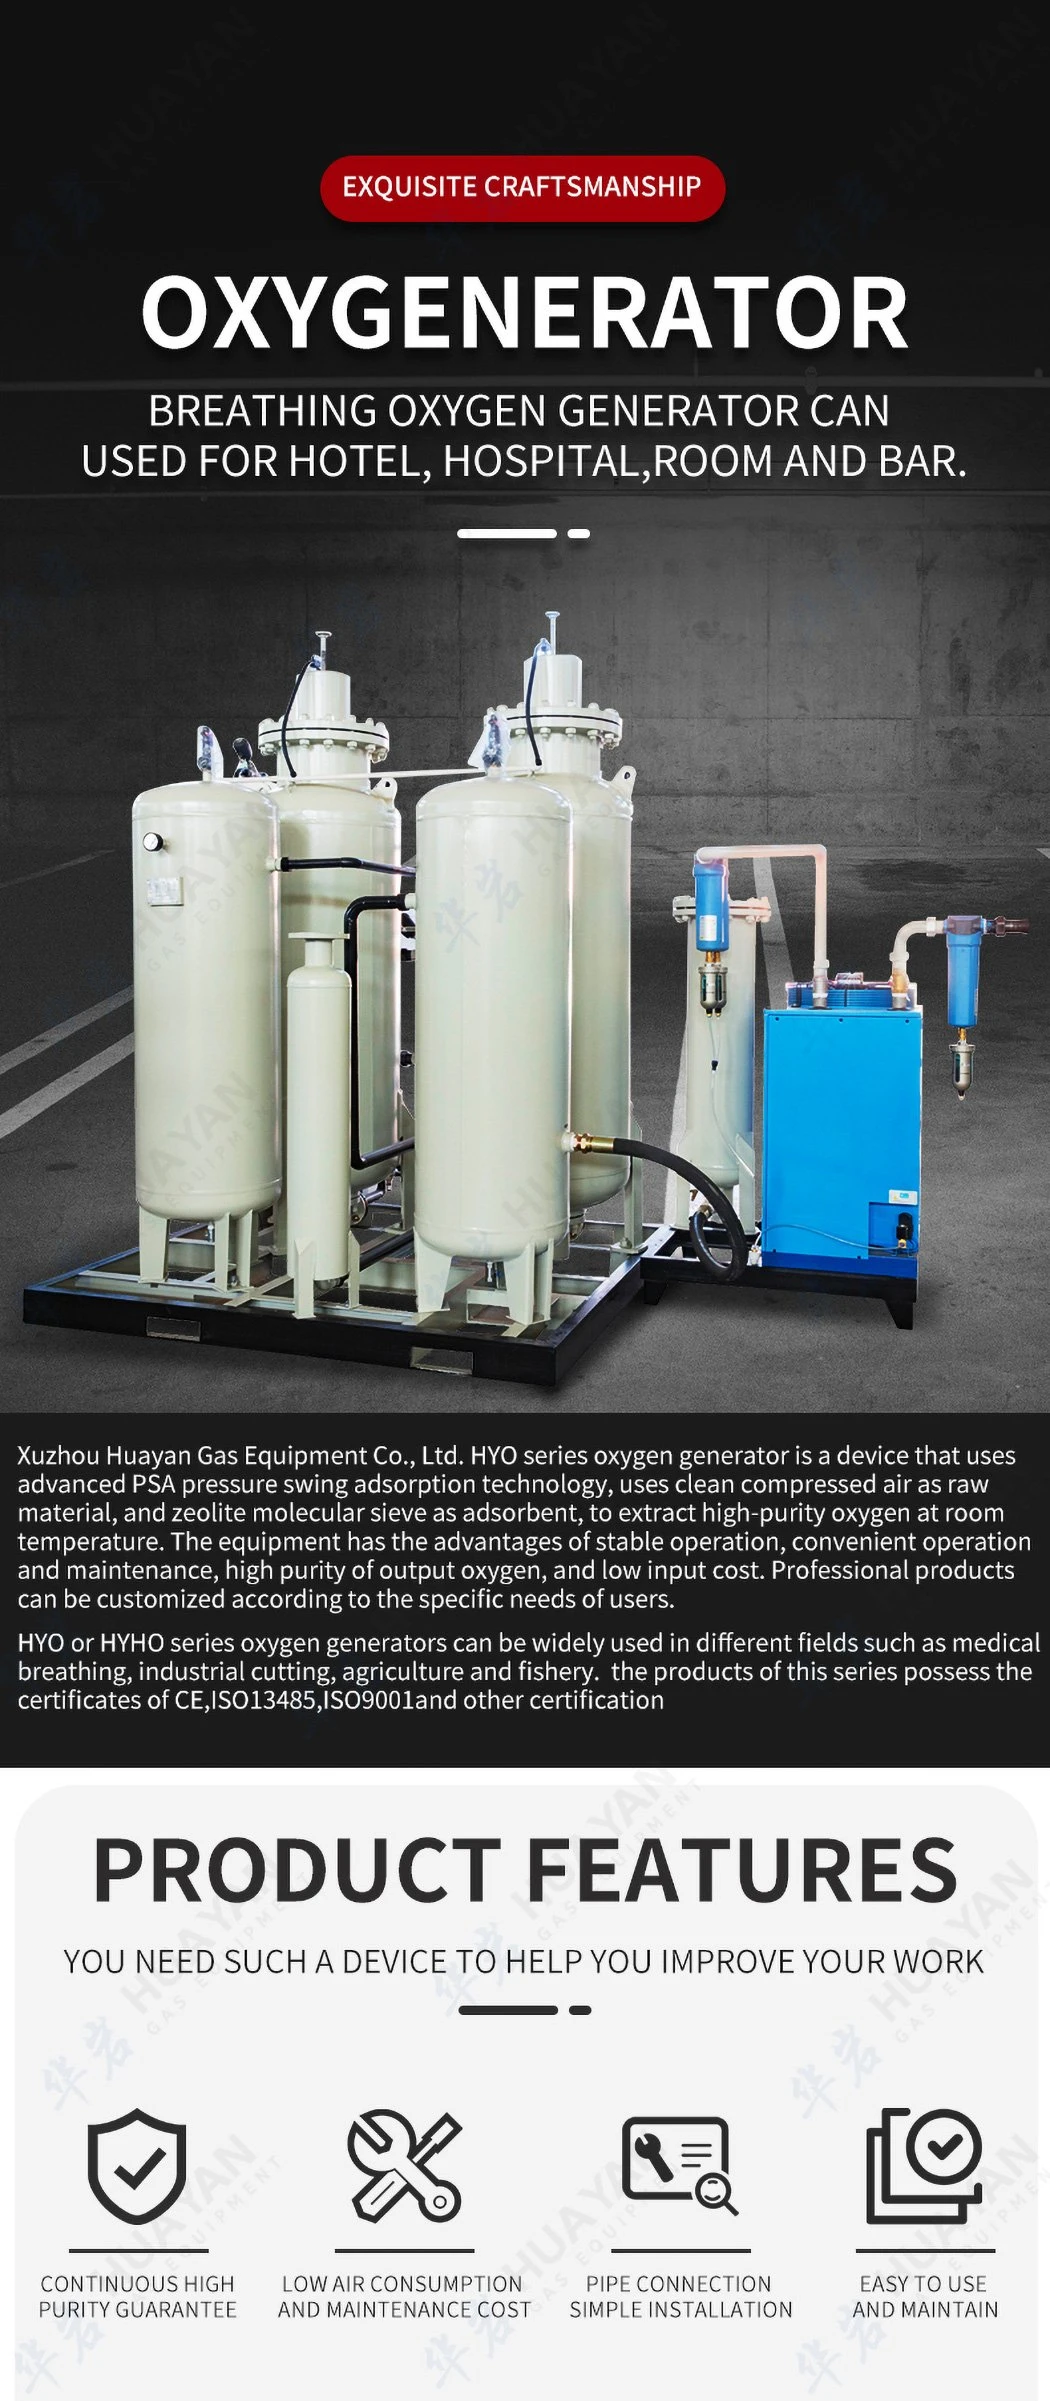 Hyo-25 High Efficiency Psa Oxygen Plant Oxygen Filling System Industrial Oxygen Generator